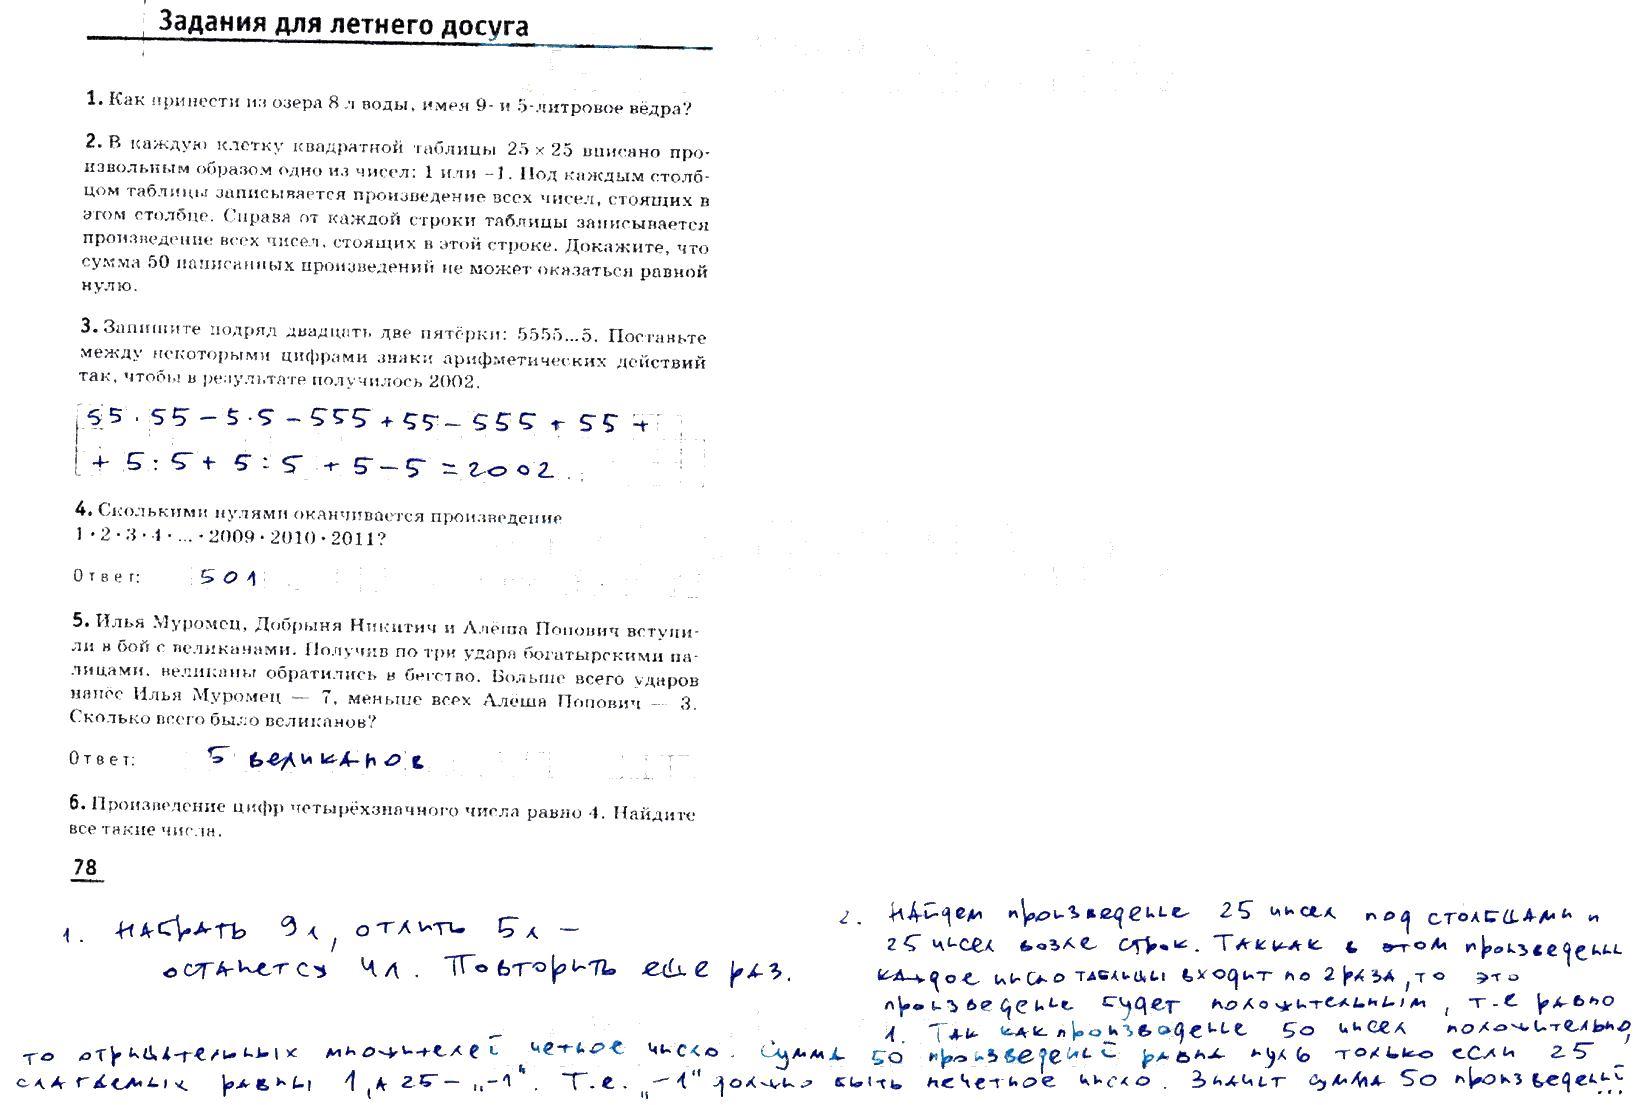 гдз 6 класс рабочая тетрадь часть 2 страница 78 математика Муравин, Муравина